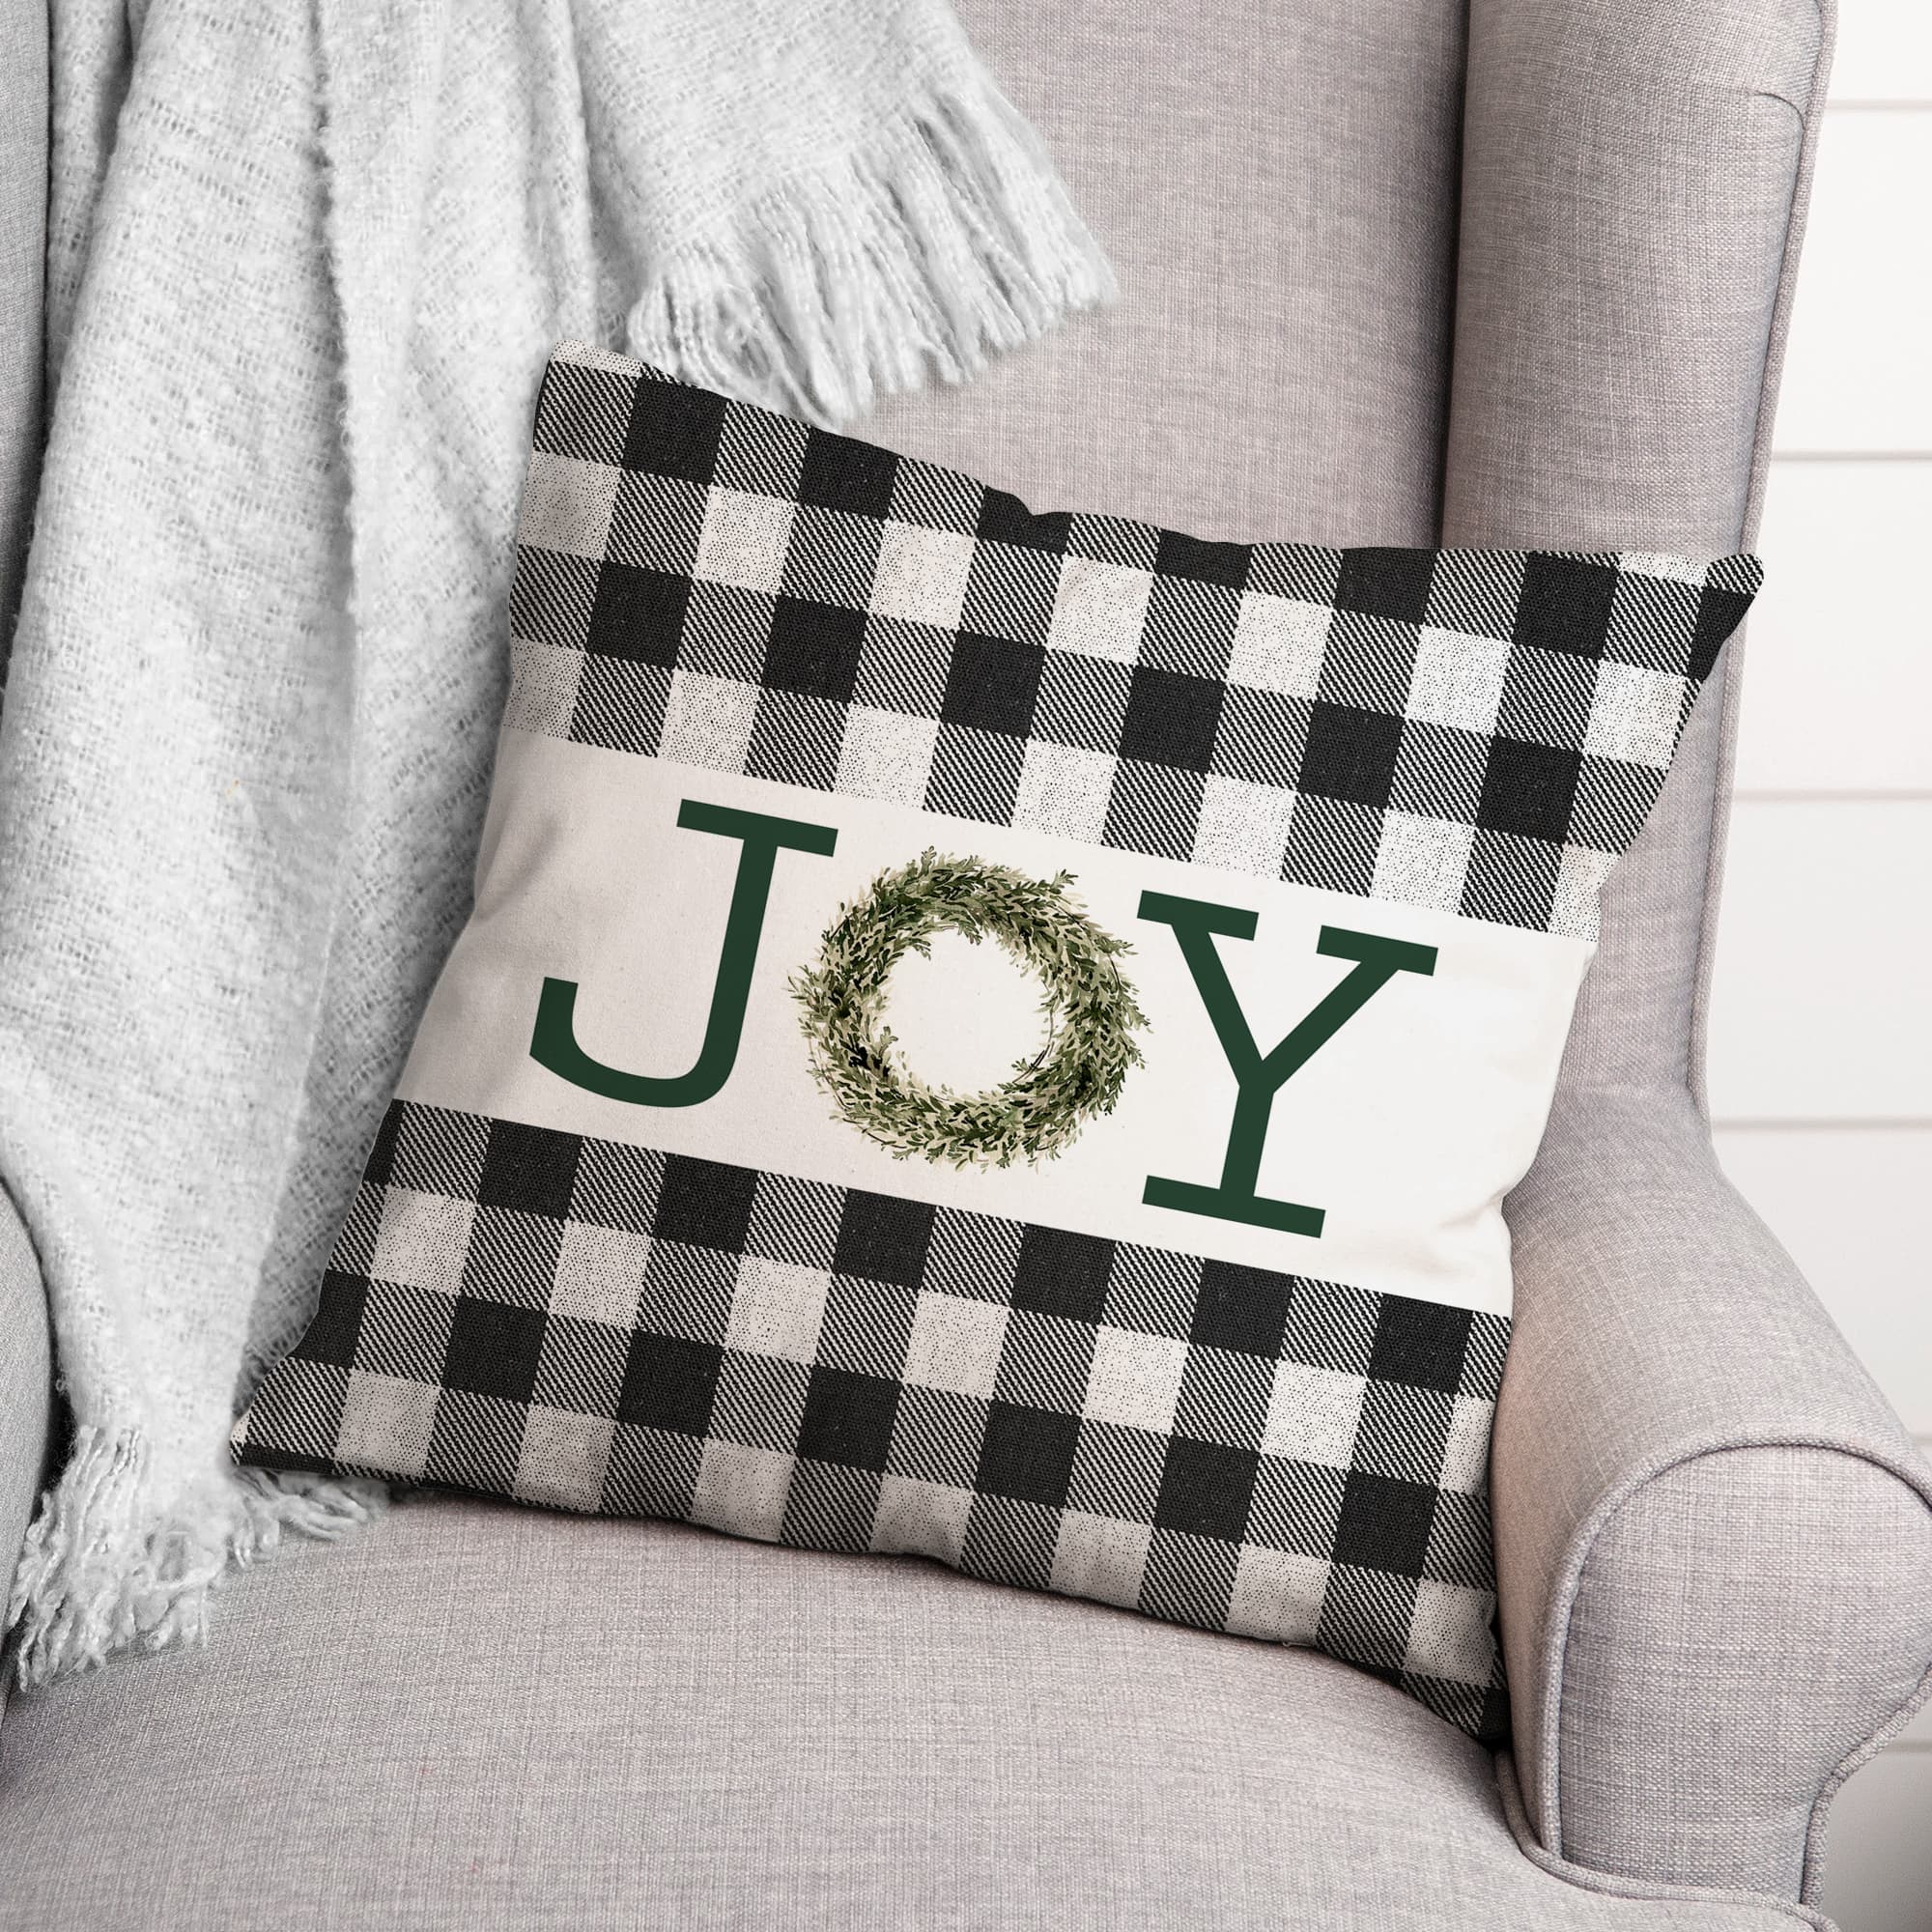 Joy Wreath Green 18x18 Throw Pillow